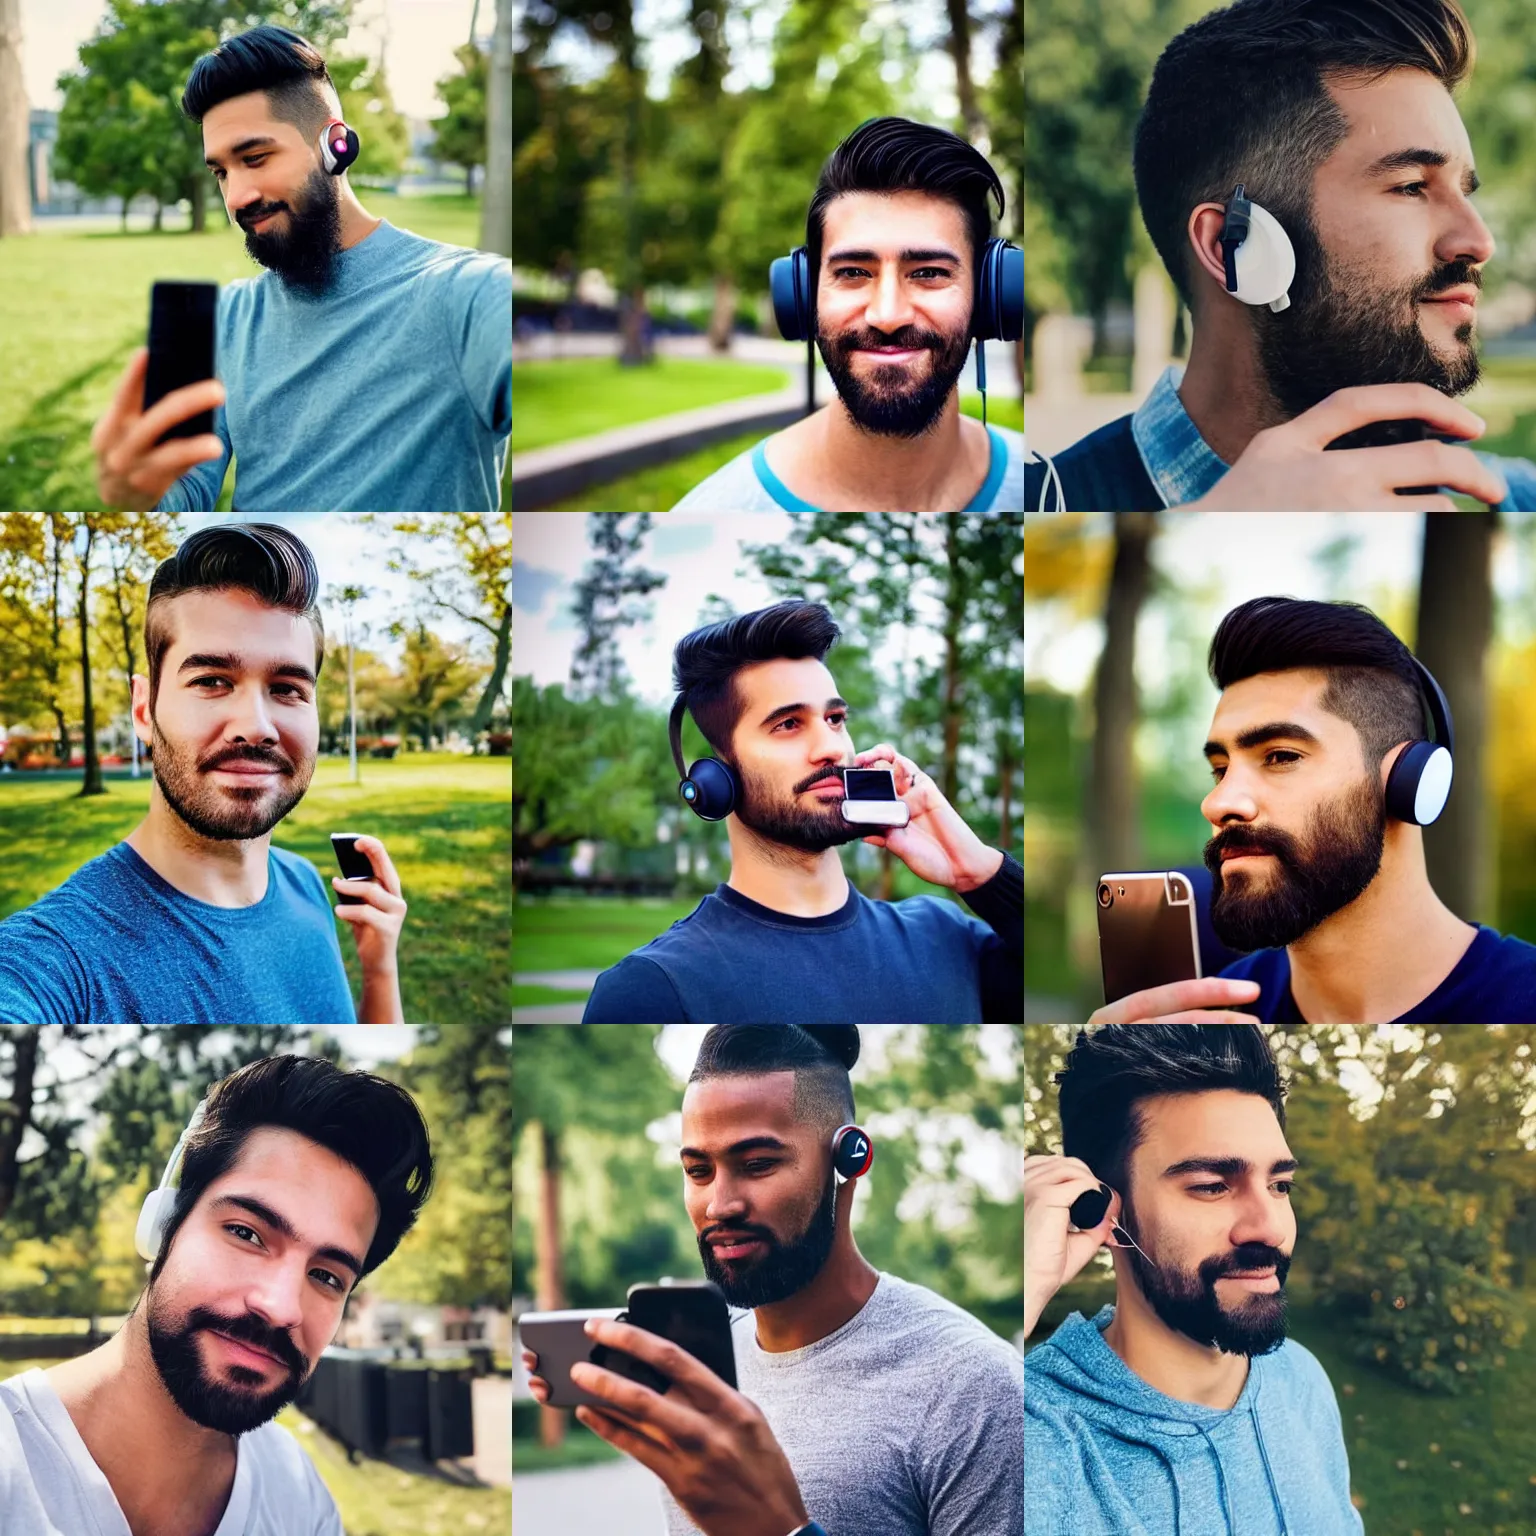 Best Mirror Selfie Poses For Boys | Mirror Selfie Ideas For Instagram Men  Outfiters - YouTube